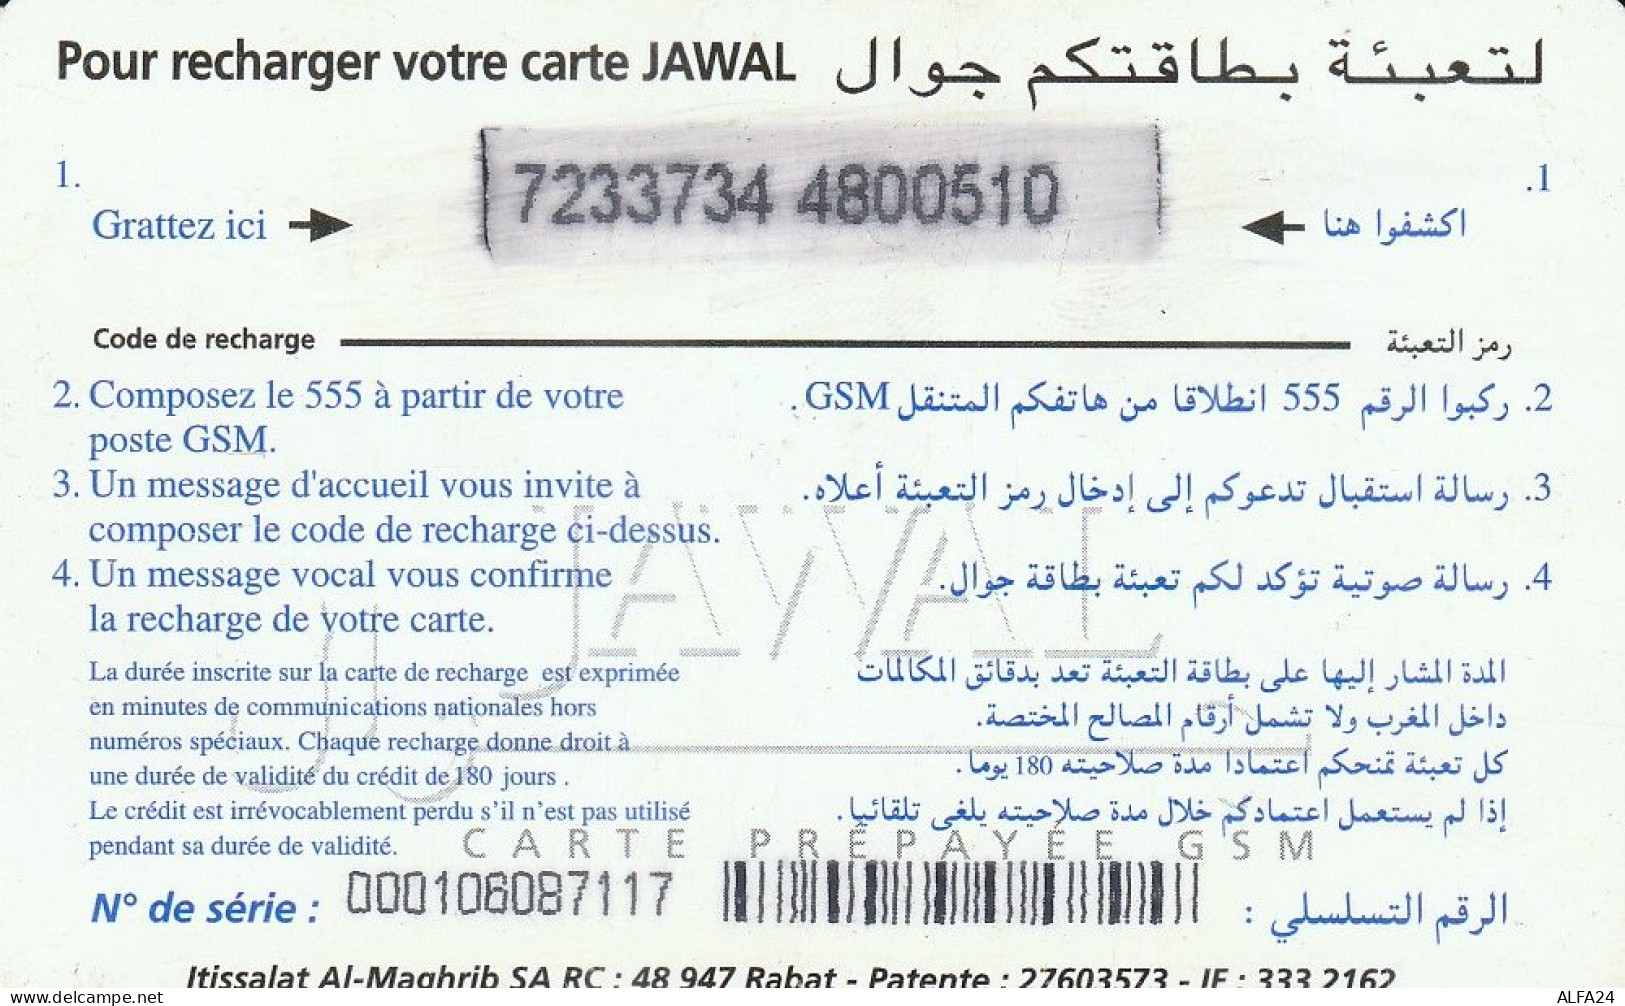 PREPAID PHONE CARD MAROCCO  (CZ2450 - Morocco